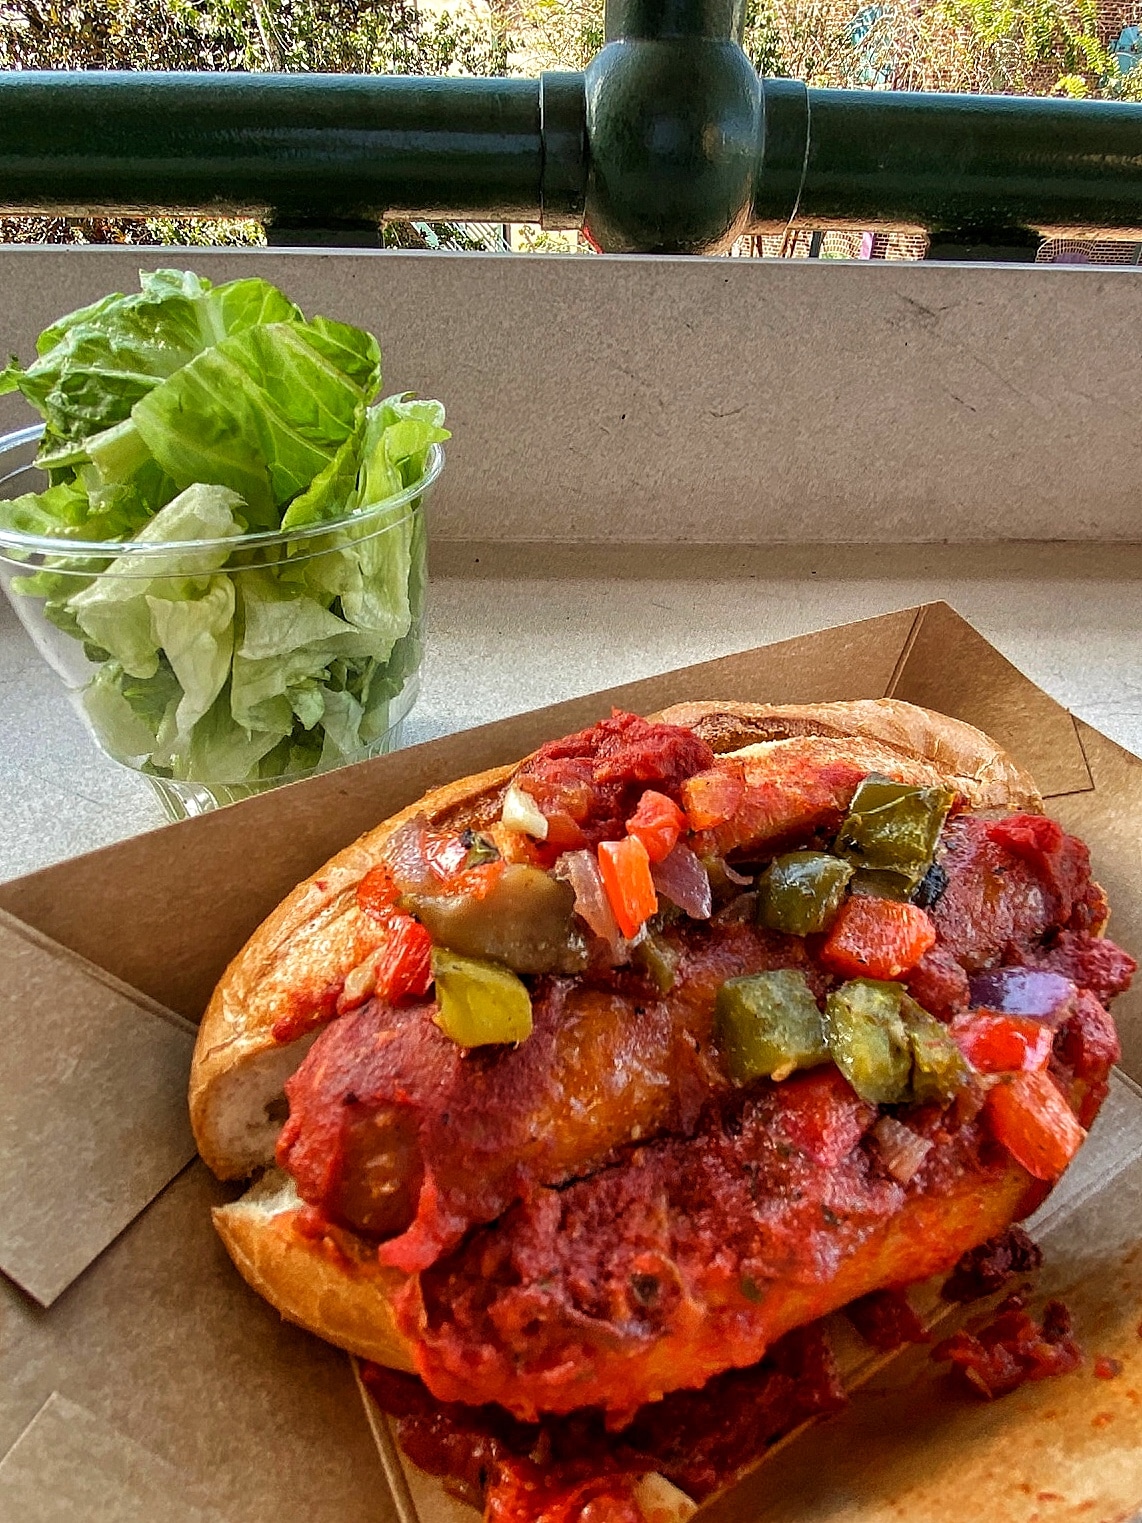 Vegan Spicy Italian Sausage Sub at PizzeRizzo in Disney’s Hollywood Studios at Walt Disney World